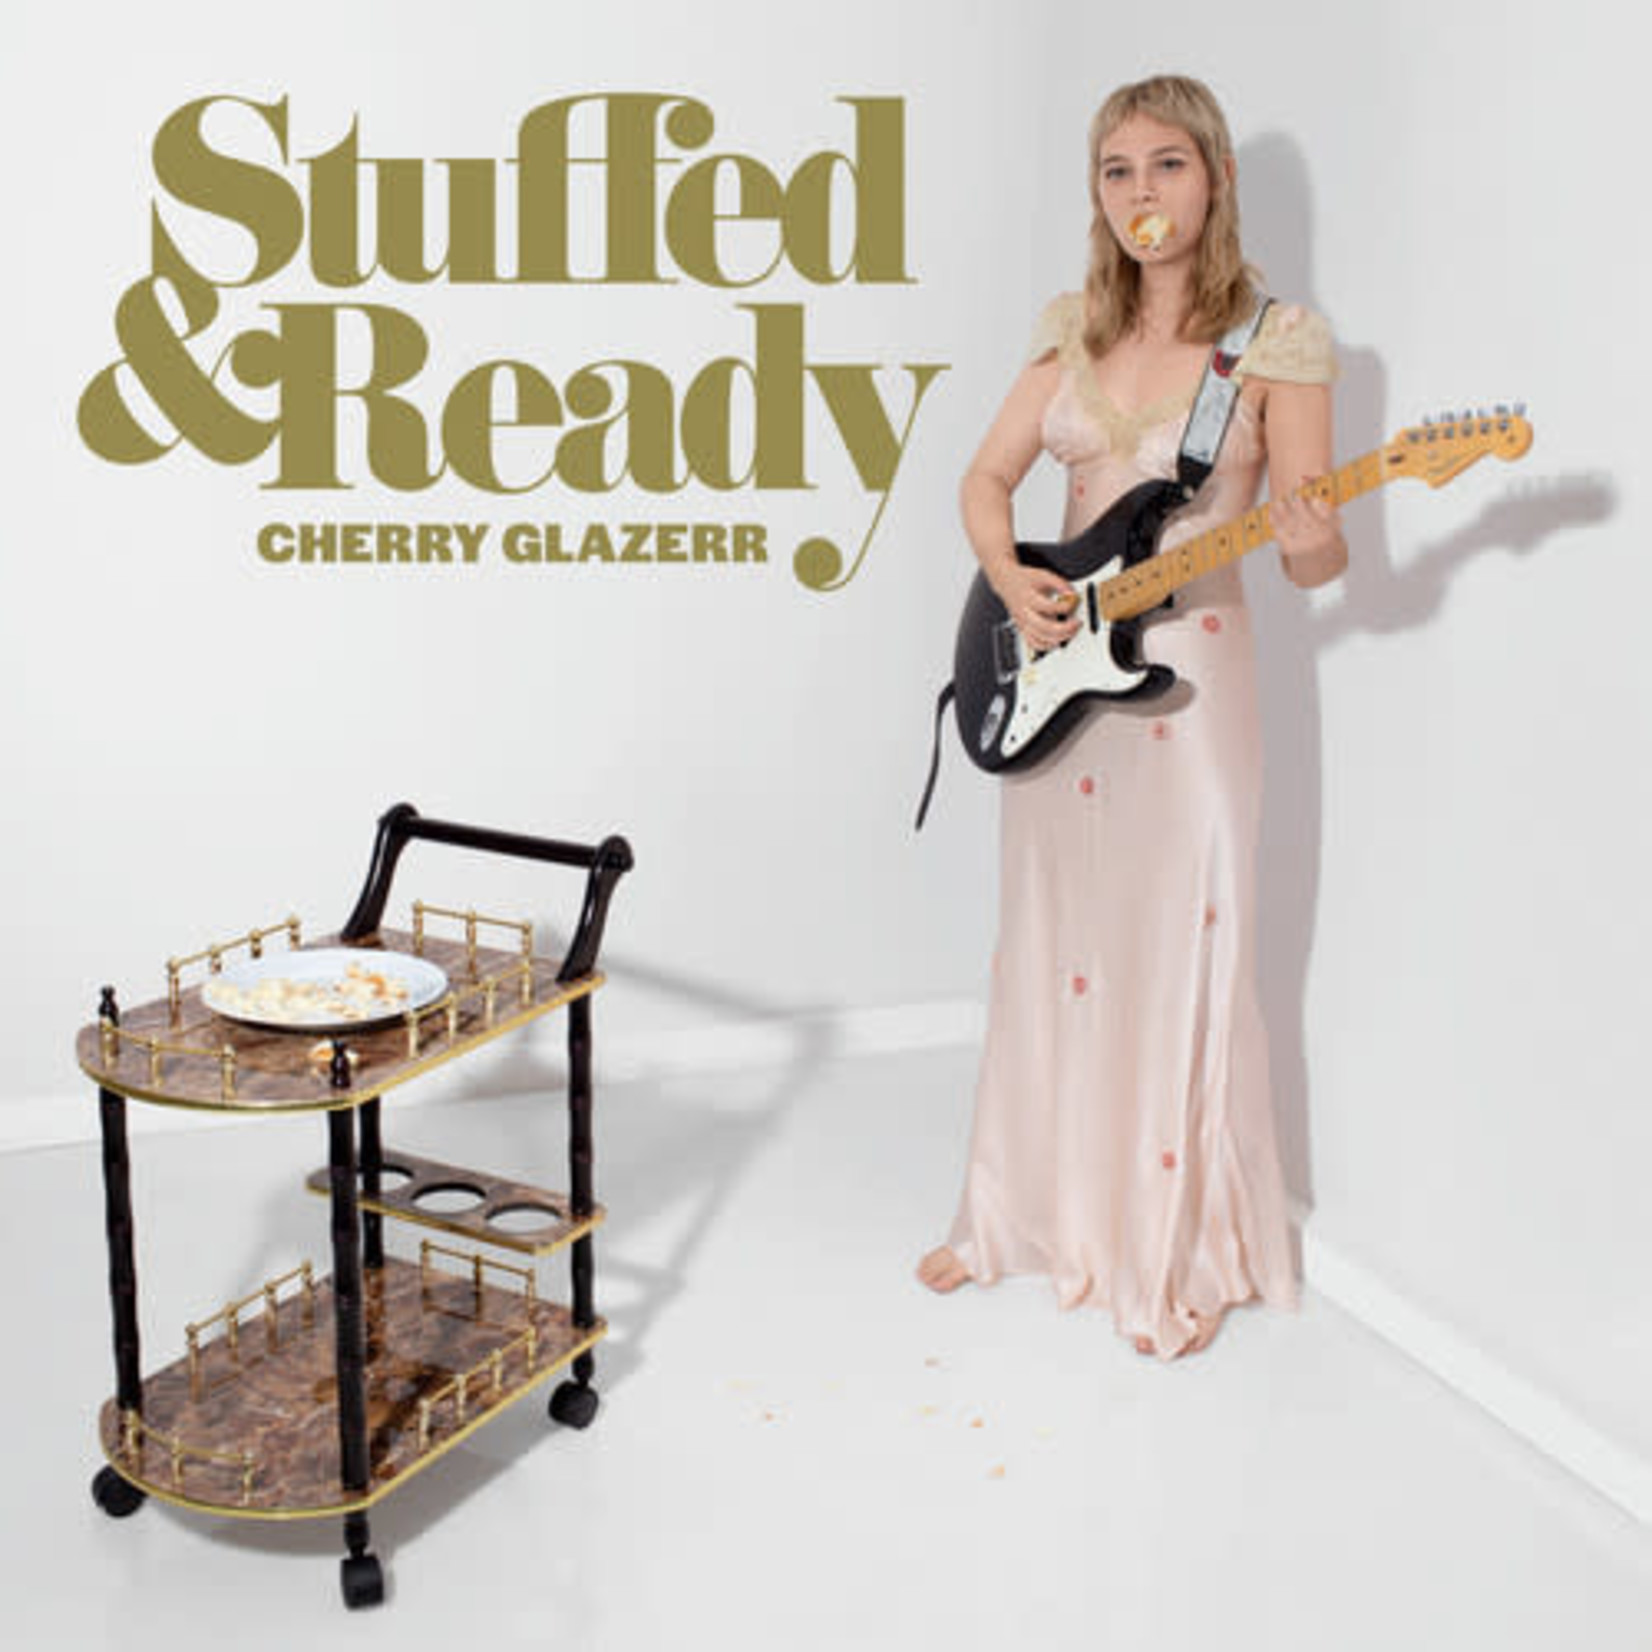 Secretly Canadian Cherry Glazerr - Stuffed & Ready (LP)